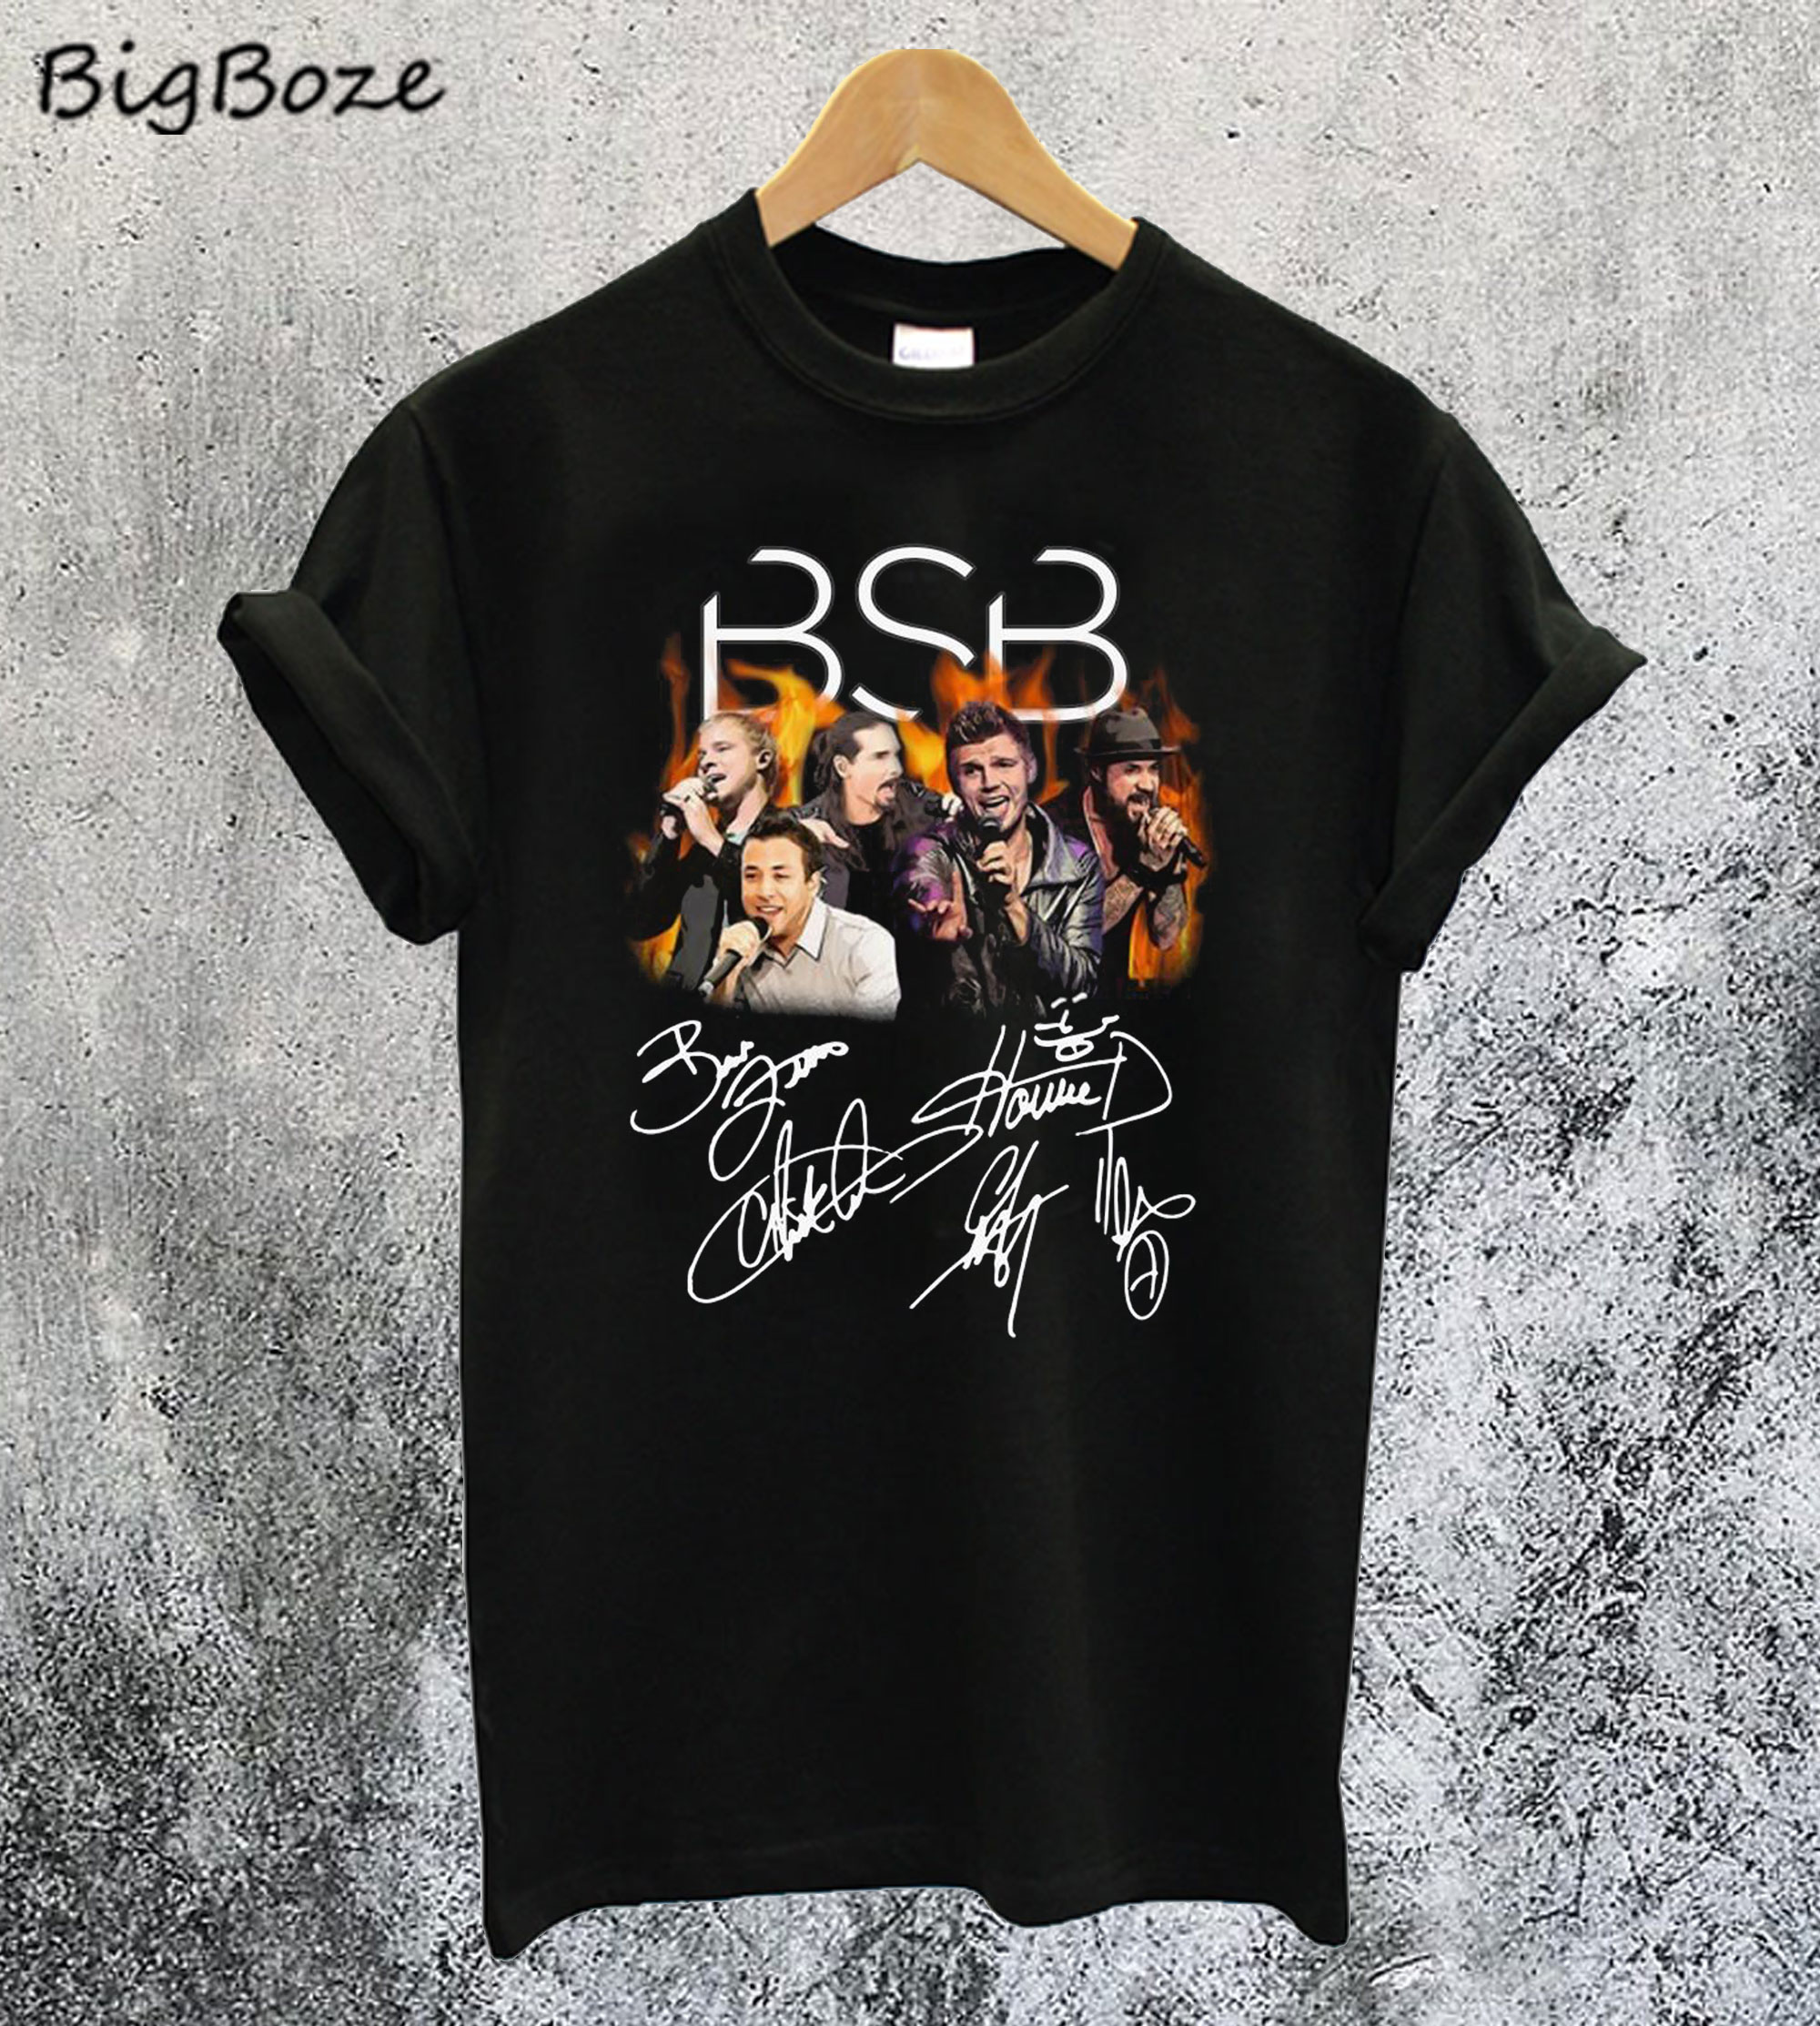 Backstreet Boys Signature T-Shirt